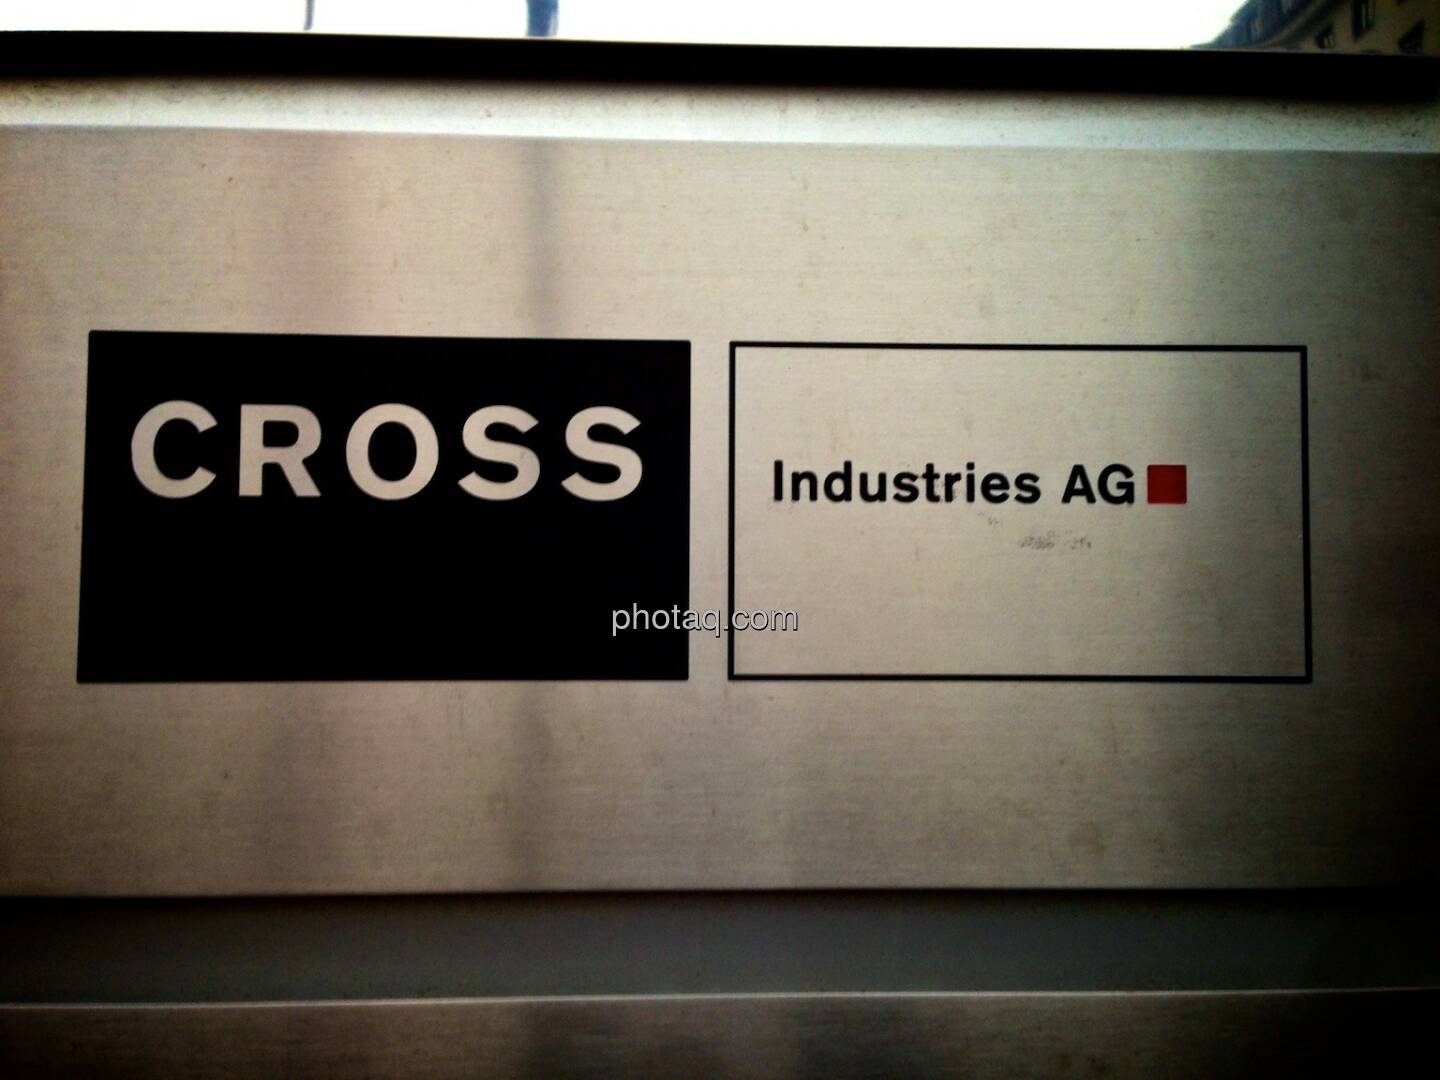 Cross Industries AG